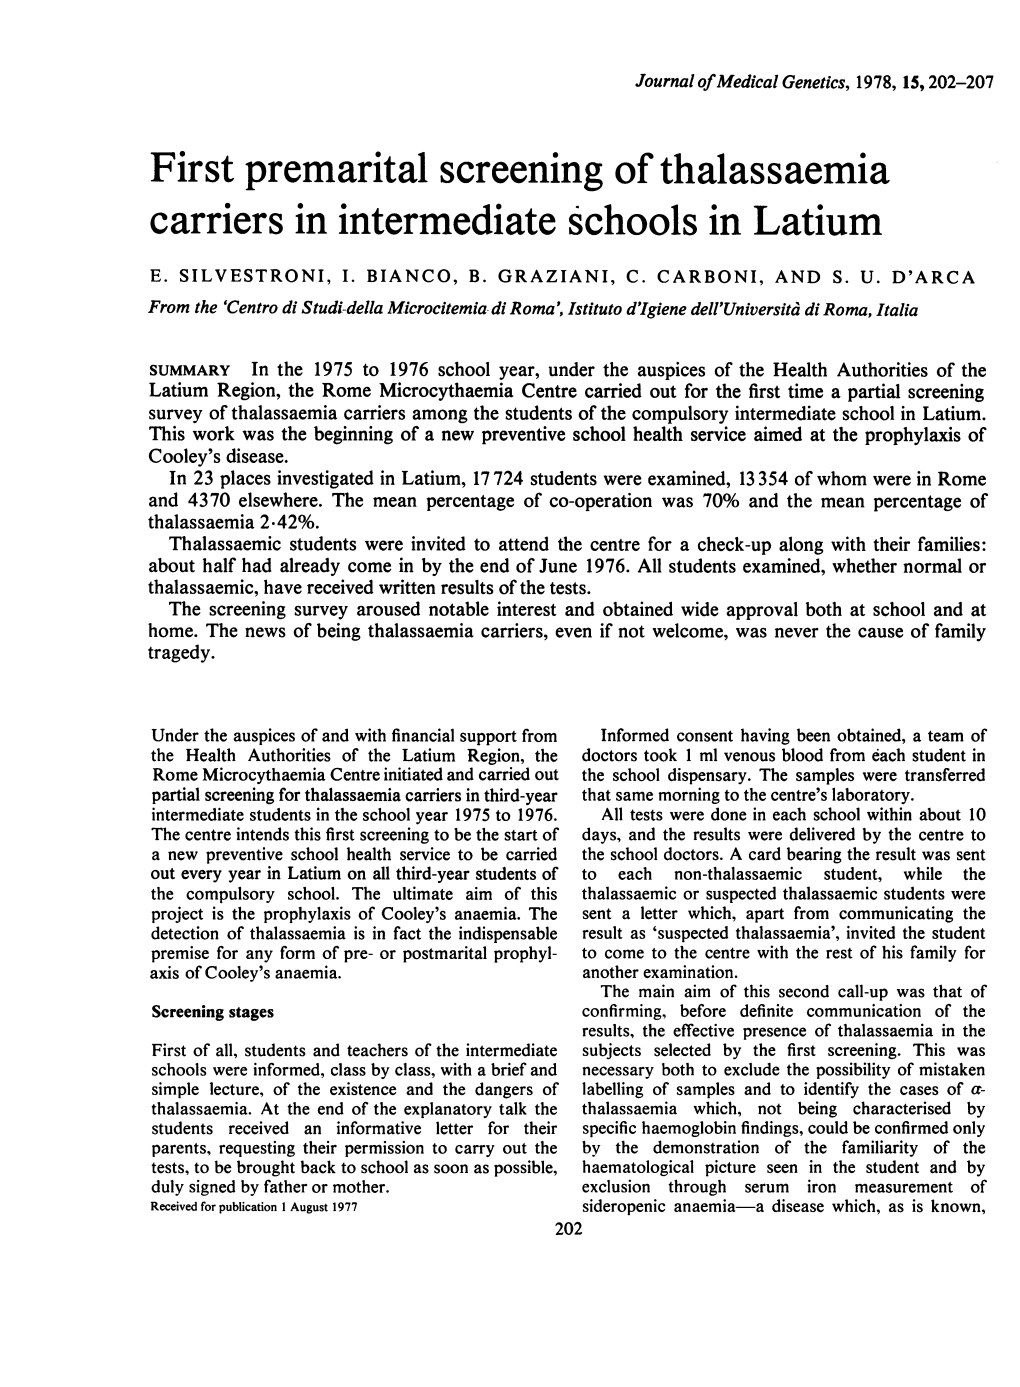 First Premarital Screening of Thalassaemia Carriers in Intermediate Schools in Latium